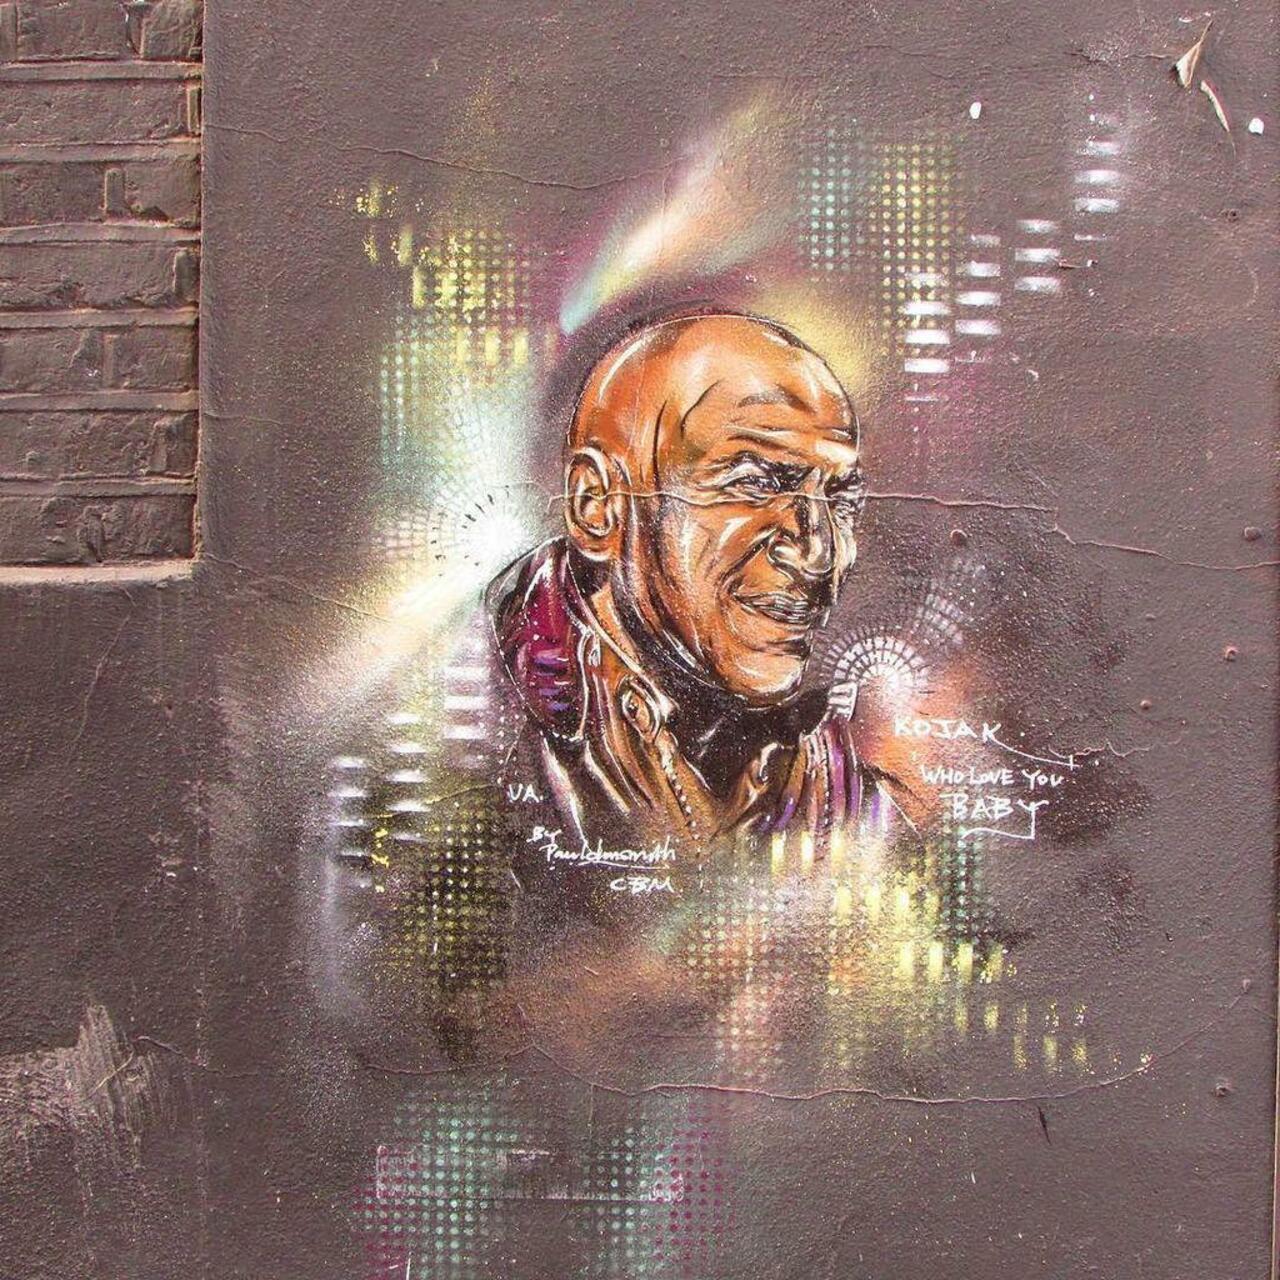 Who loves ya baby? #Kojak #TellySavalas 
#London #streetart #graffiti #graffitiart #urbana… http://ift.tt/1Fsuva3 http://t.co/CXkuVH1QbG